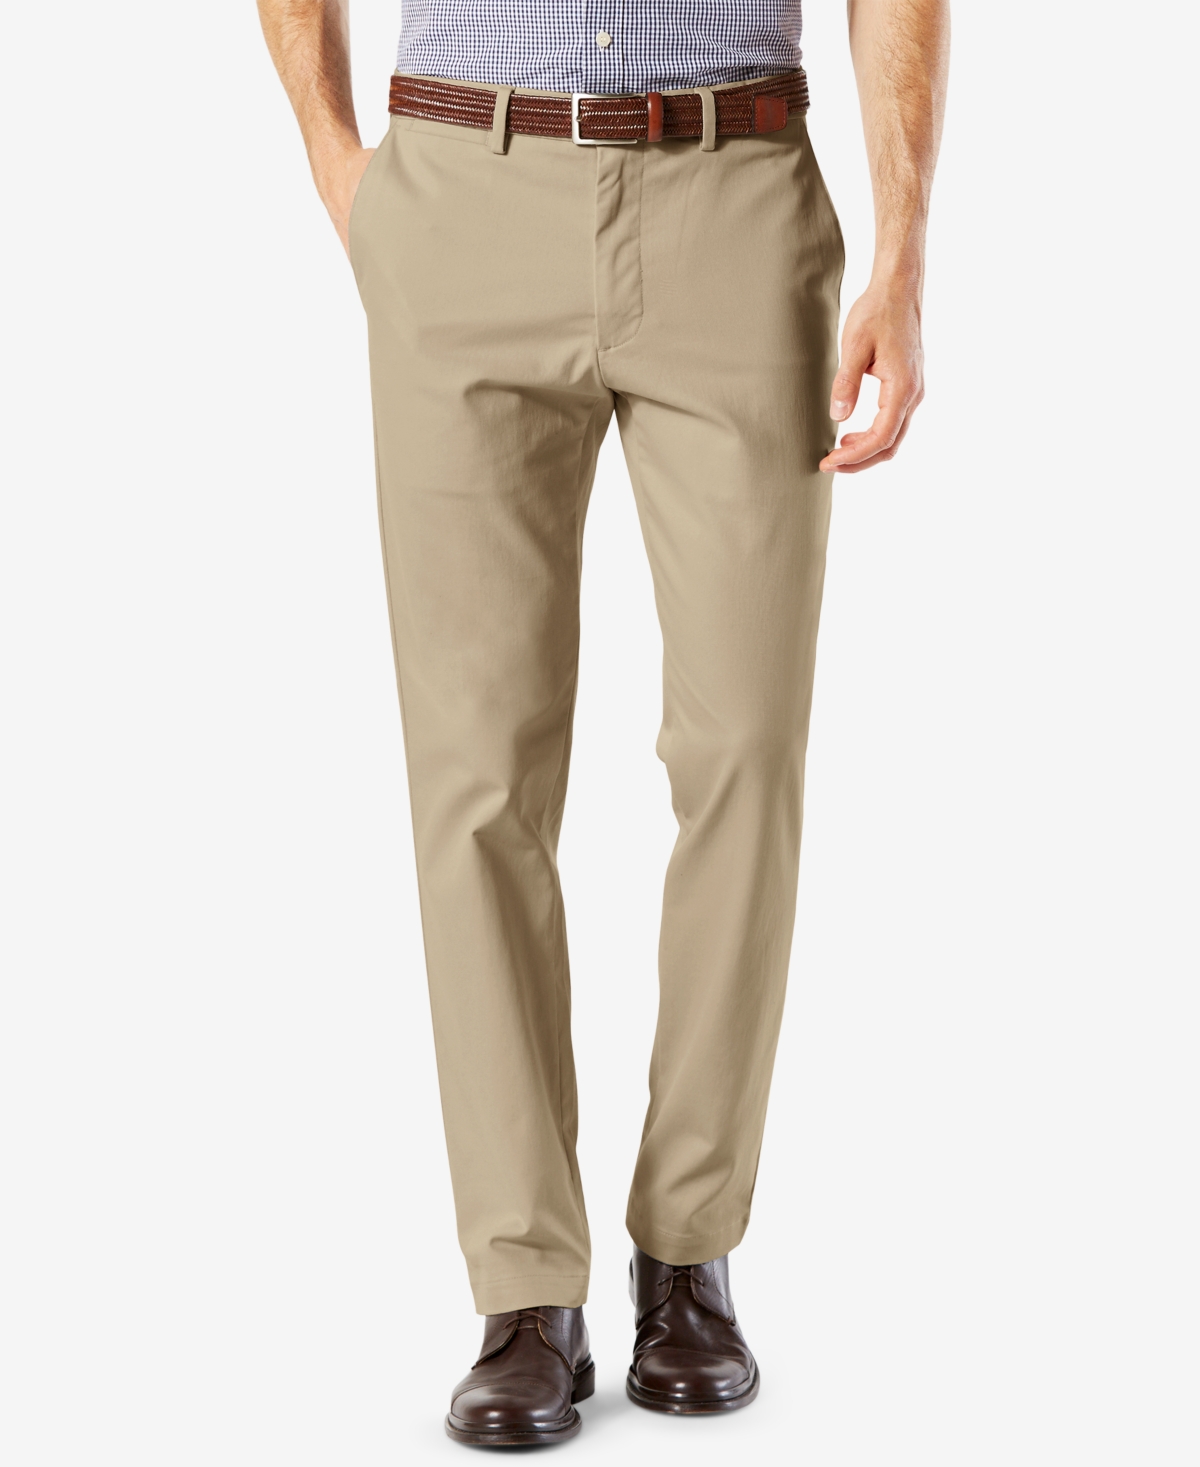 Men's Signature Lux Cotton Slim Fit Stretch Khaki Pants - New British Khaki